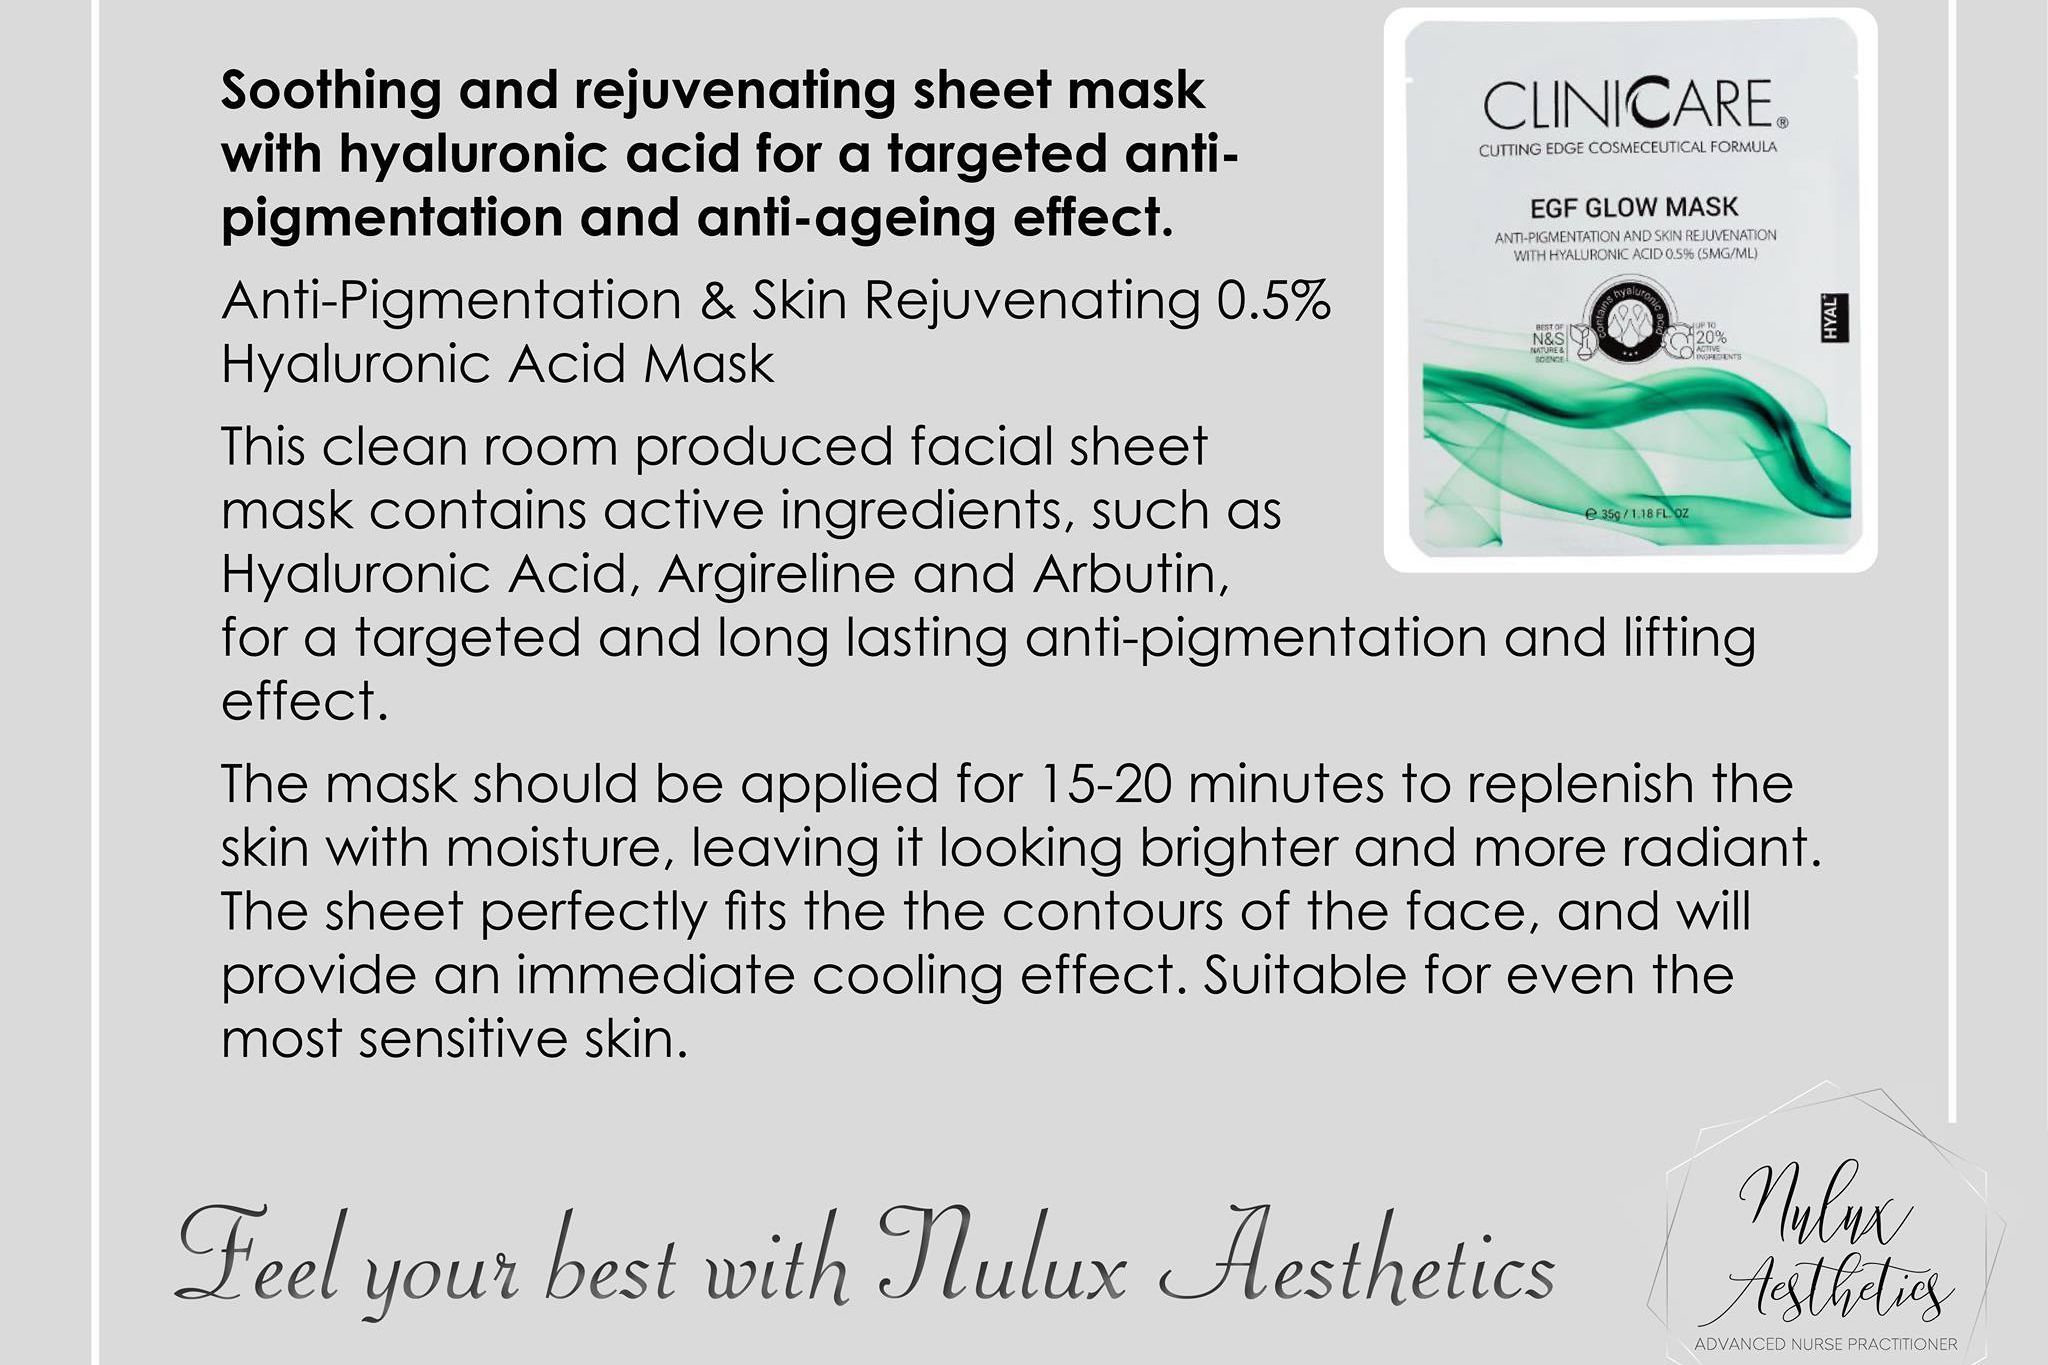 Add on - Clinicare Professional Mask portfolio